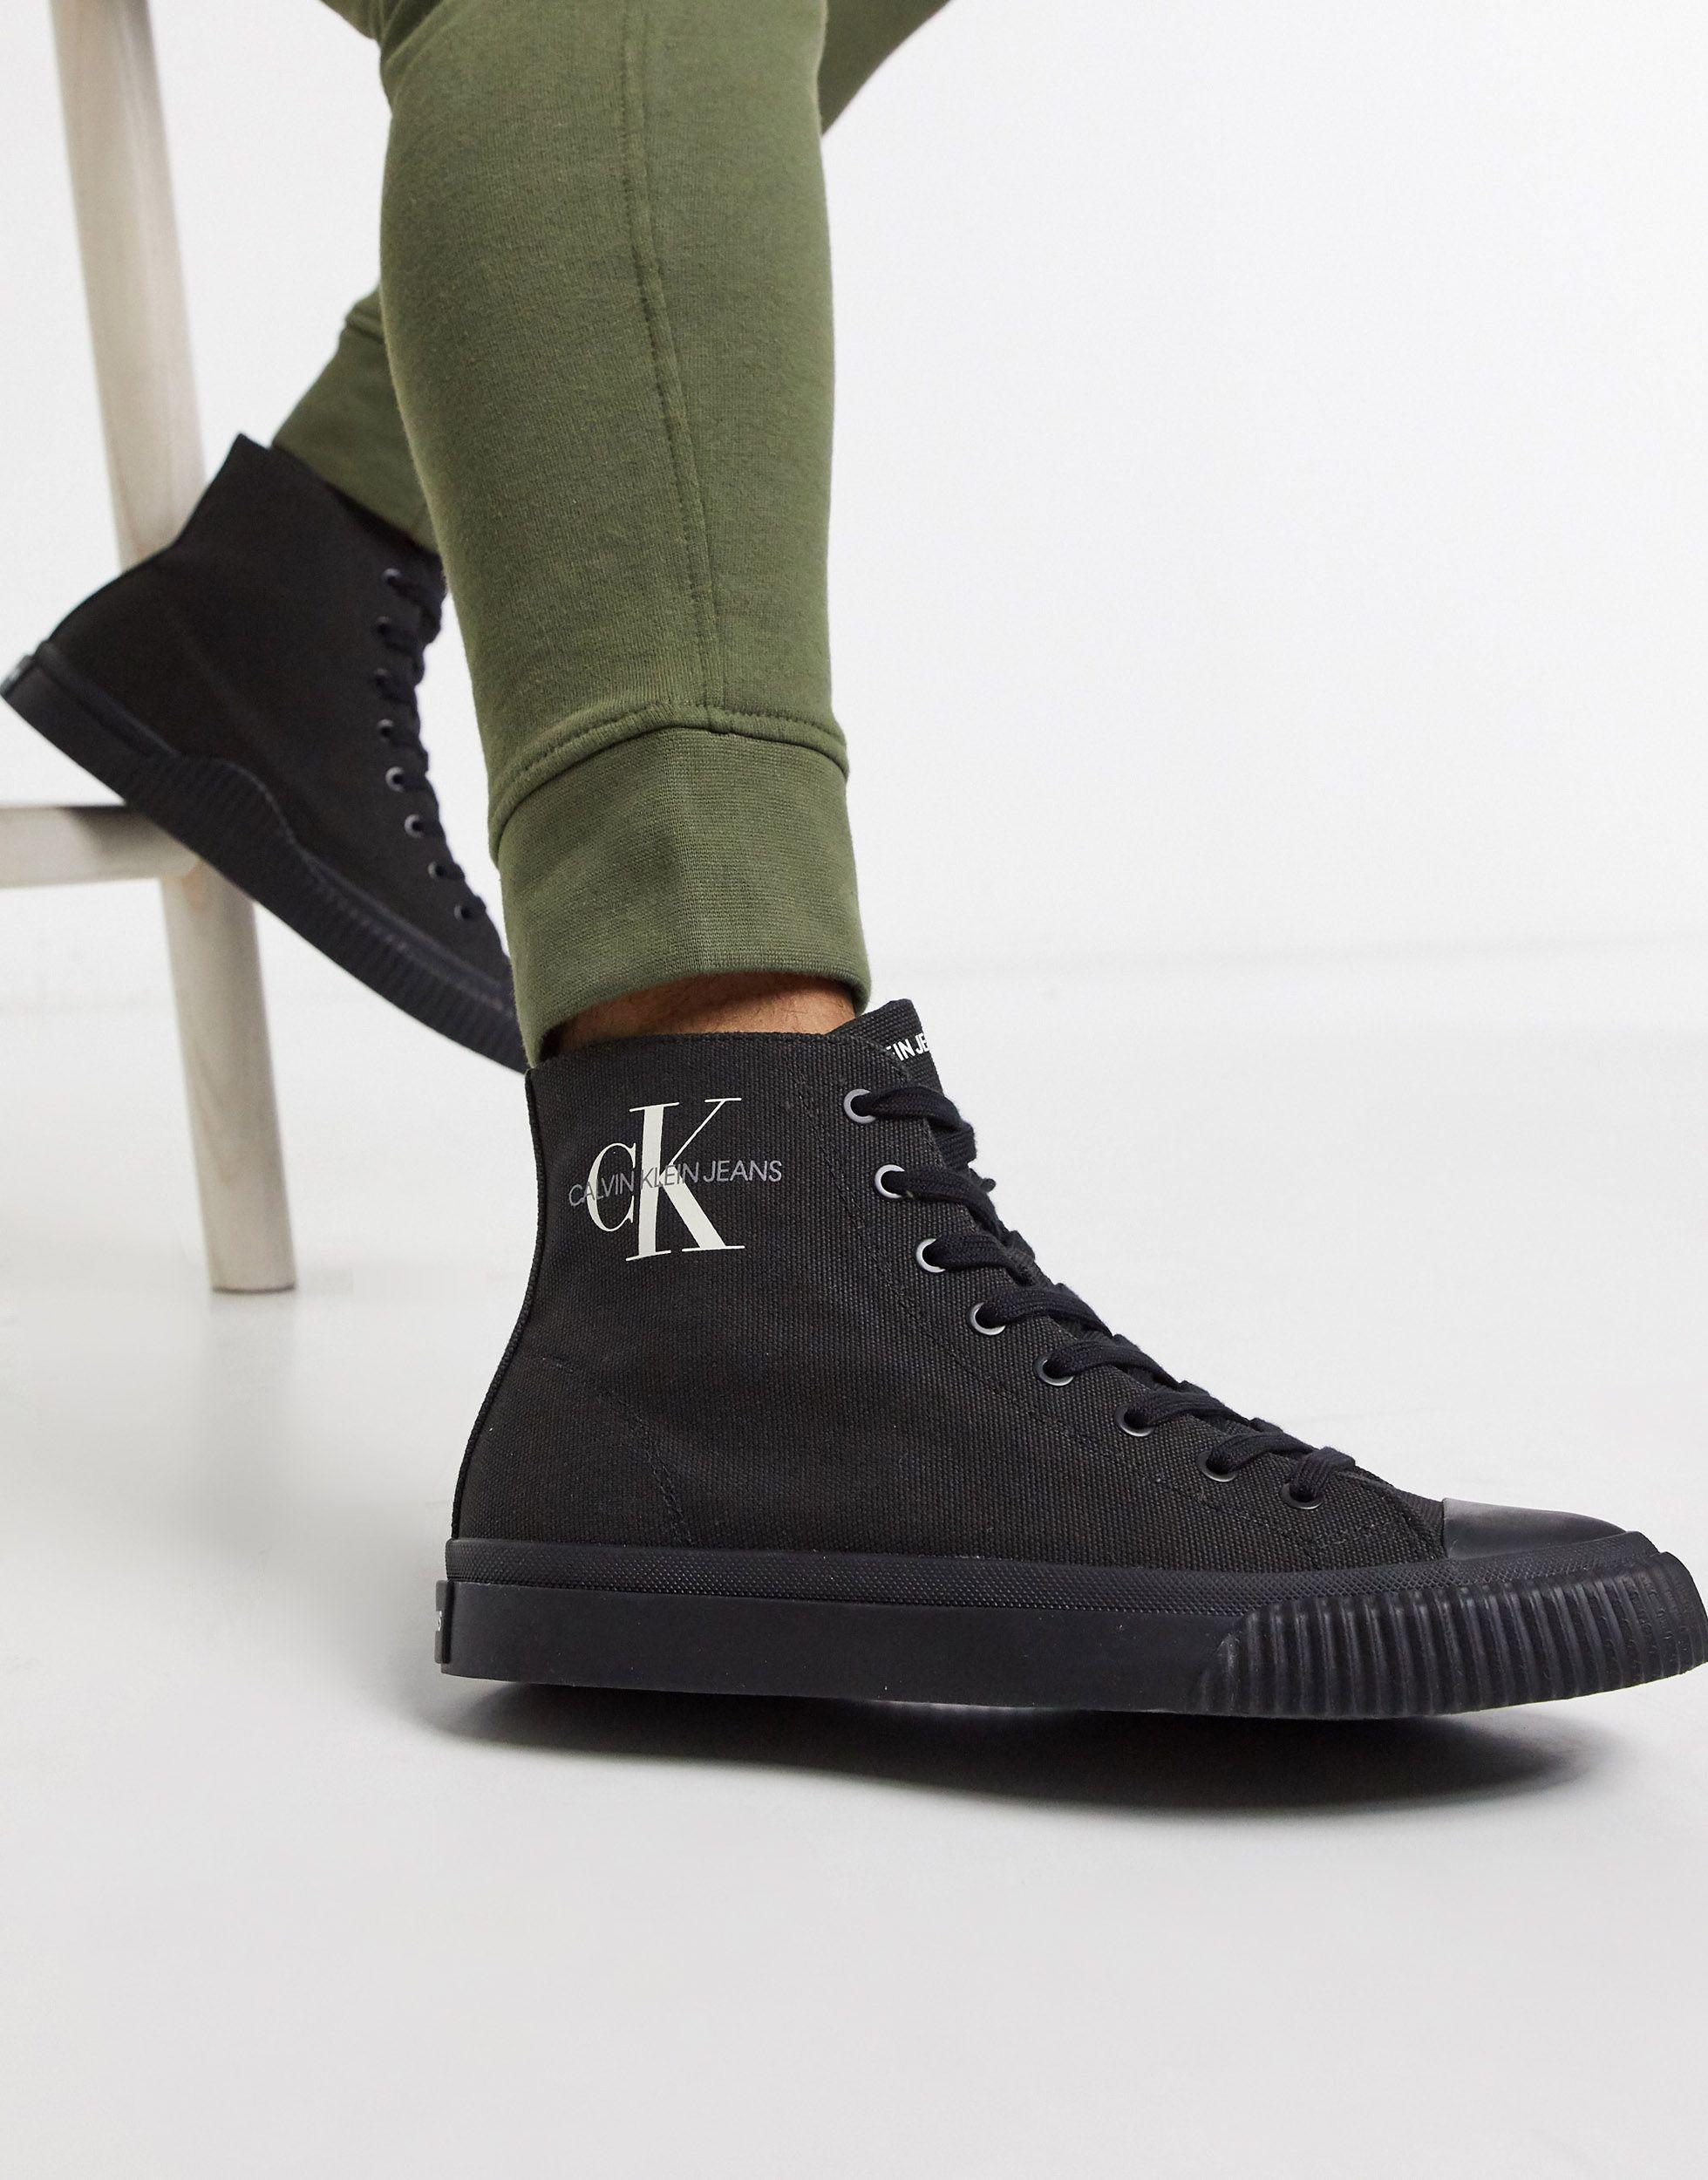 Calvin Klein Jeans Icaro Canvas High Top Sneakers in Black for Men - Lyst